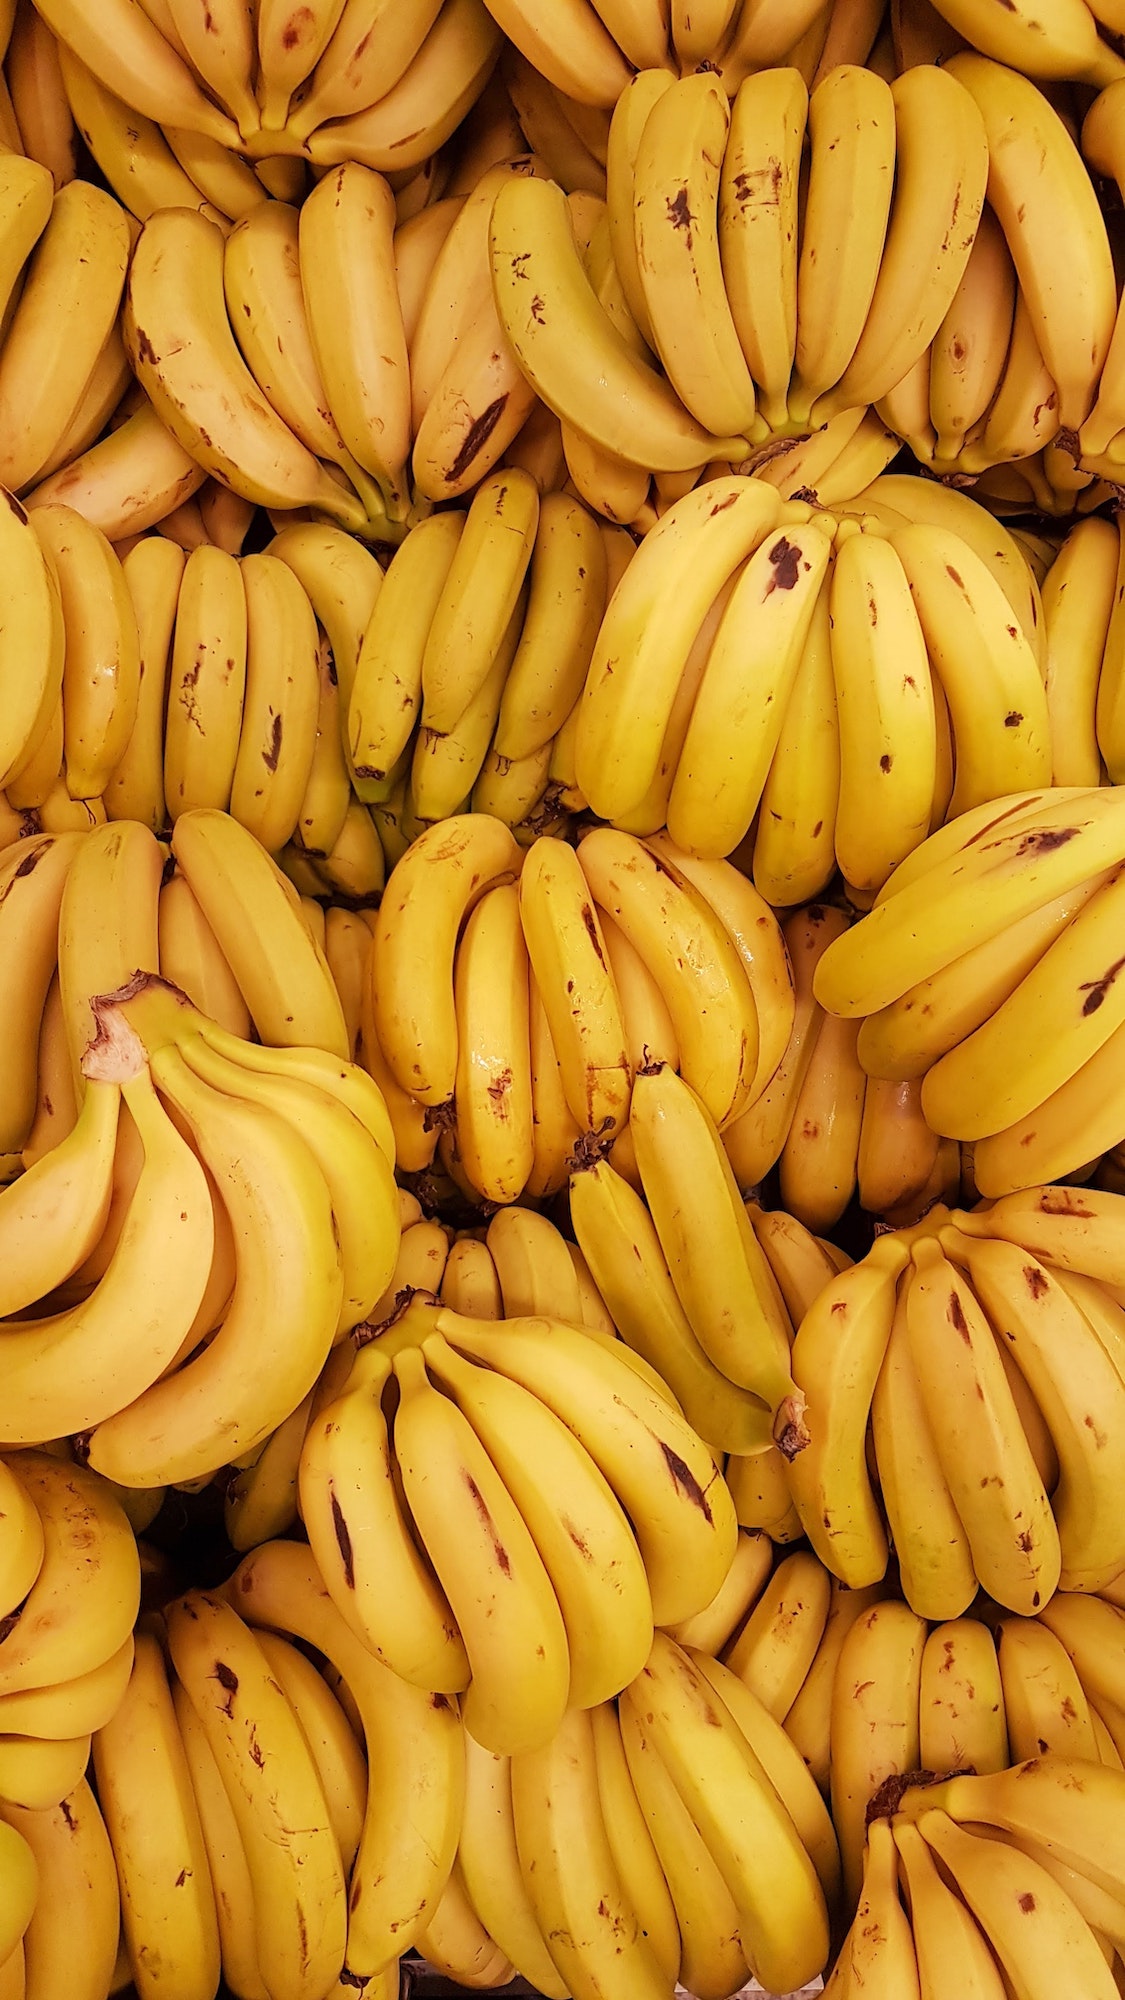 Fresh Organic Bananas Approximately 3 Lbs 1 Bunch of 6-9 Bananas